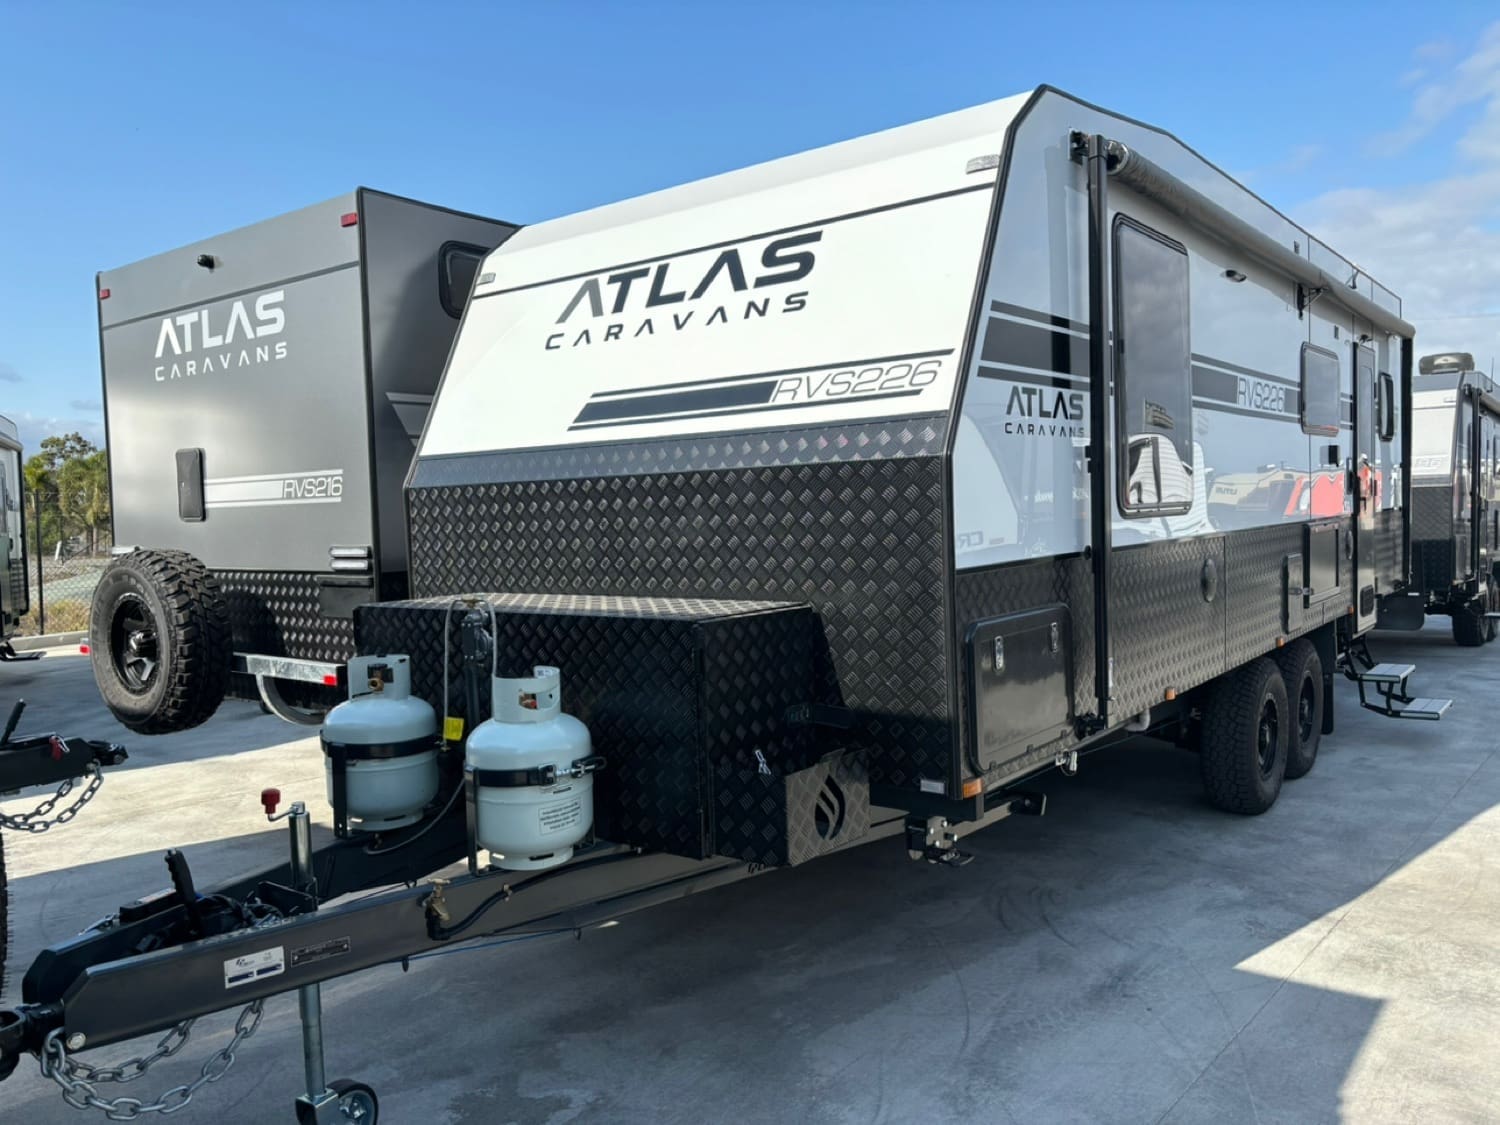 ATLAS CARAVANS RVS226 - Caravans